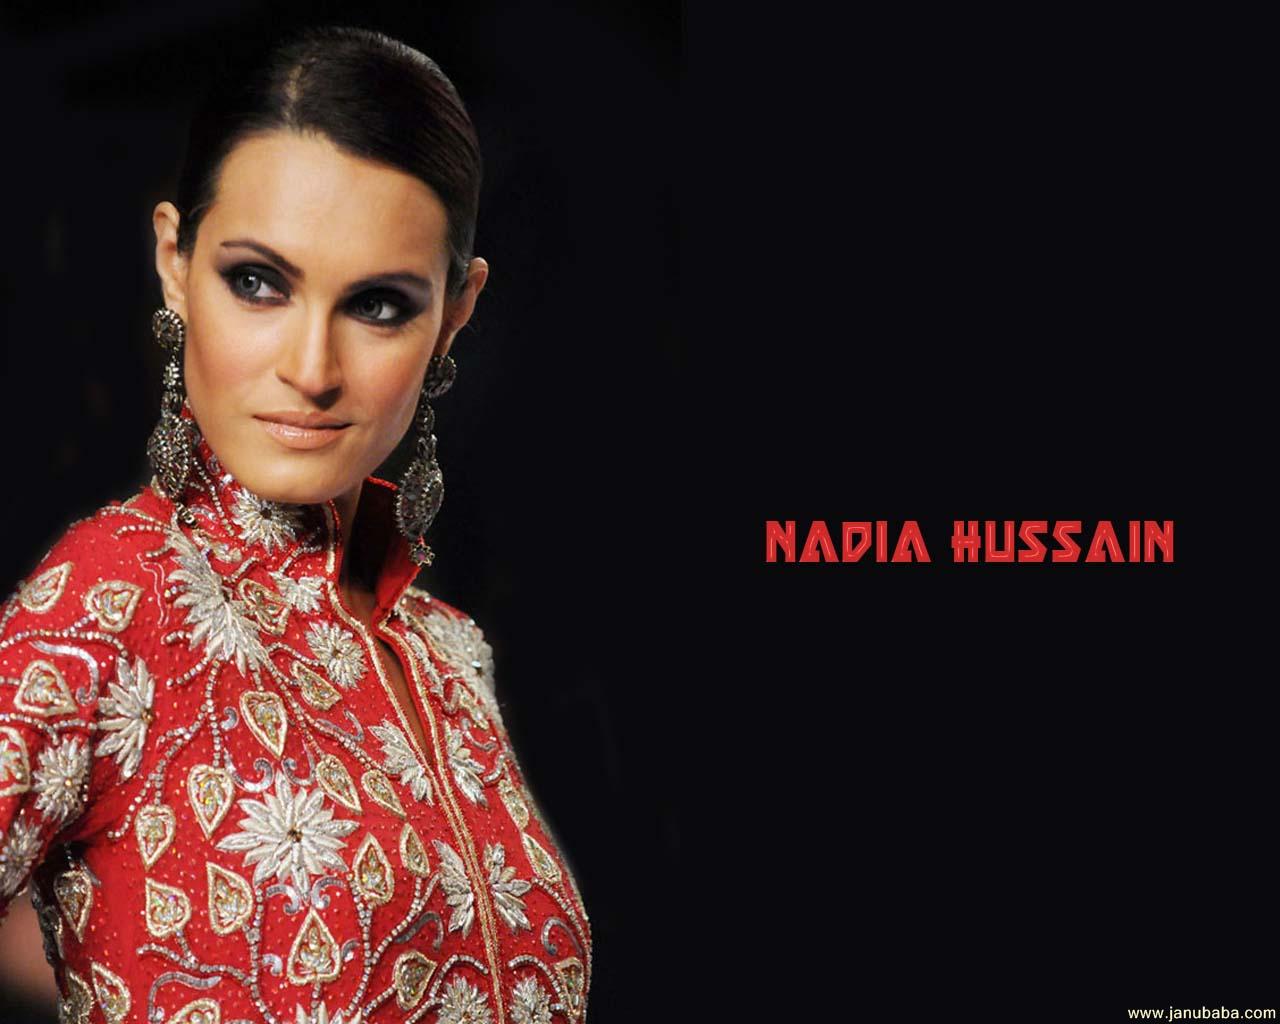 http://www.janubaba.com/Wallpapers/All_Categories/Models/Nadia_Hussain_gswiq.jpg